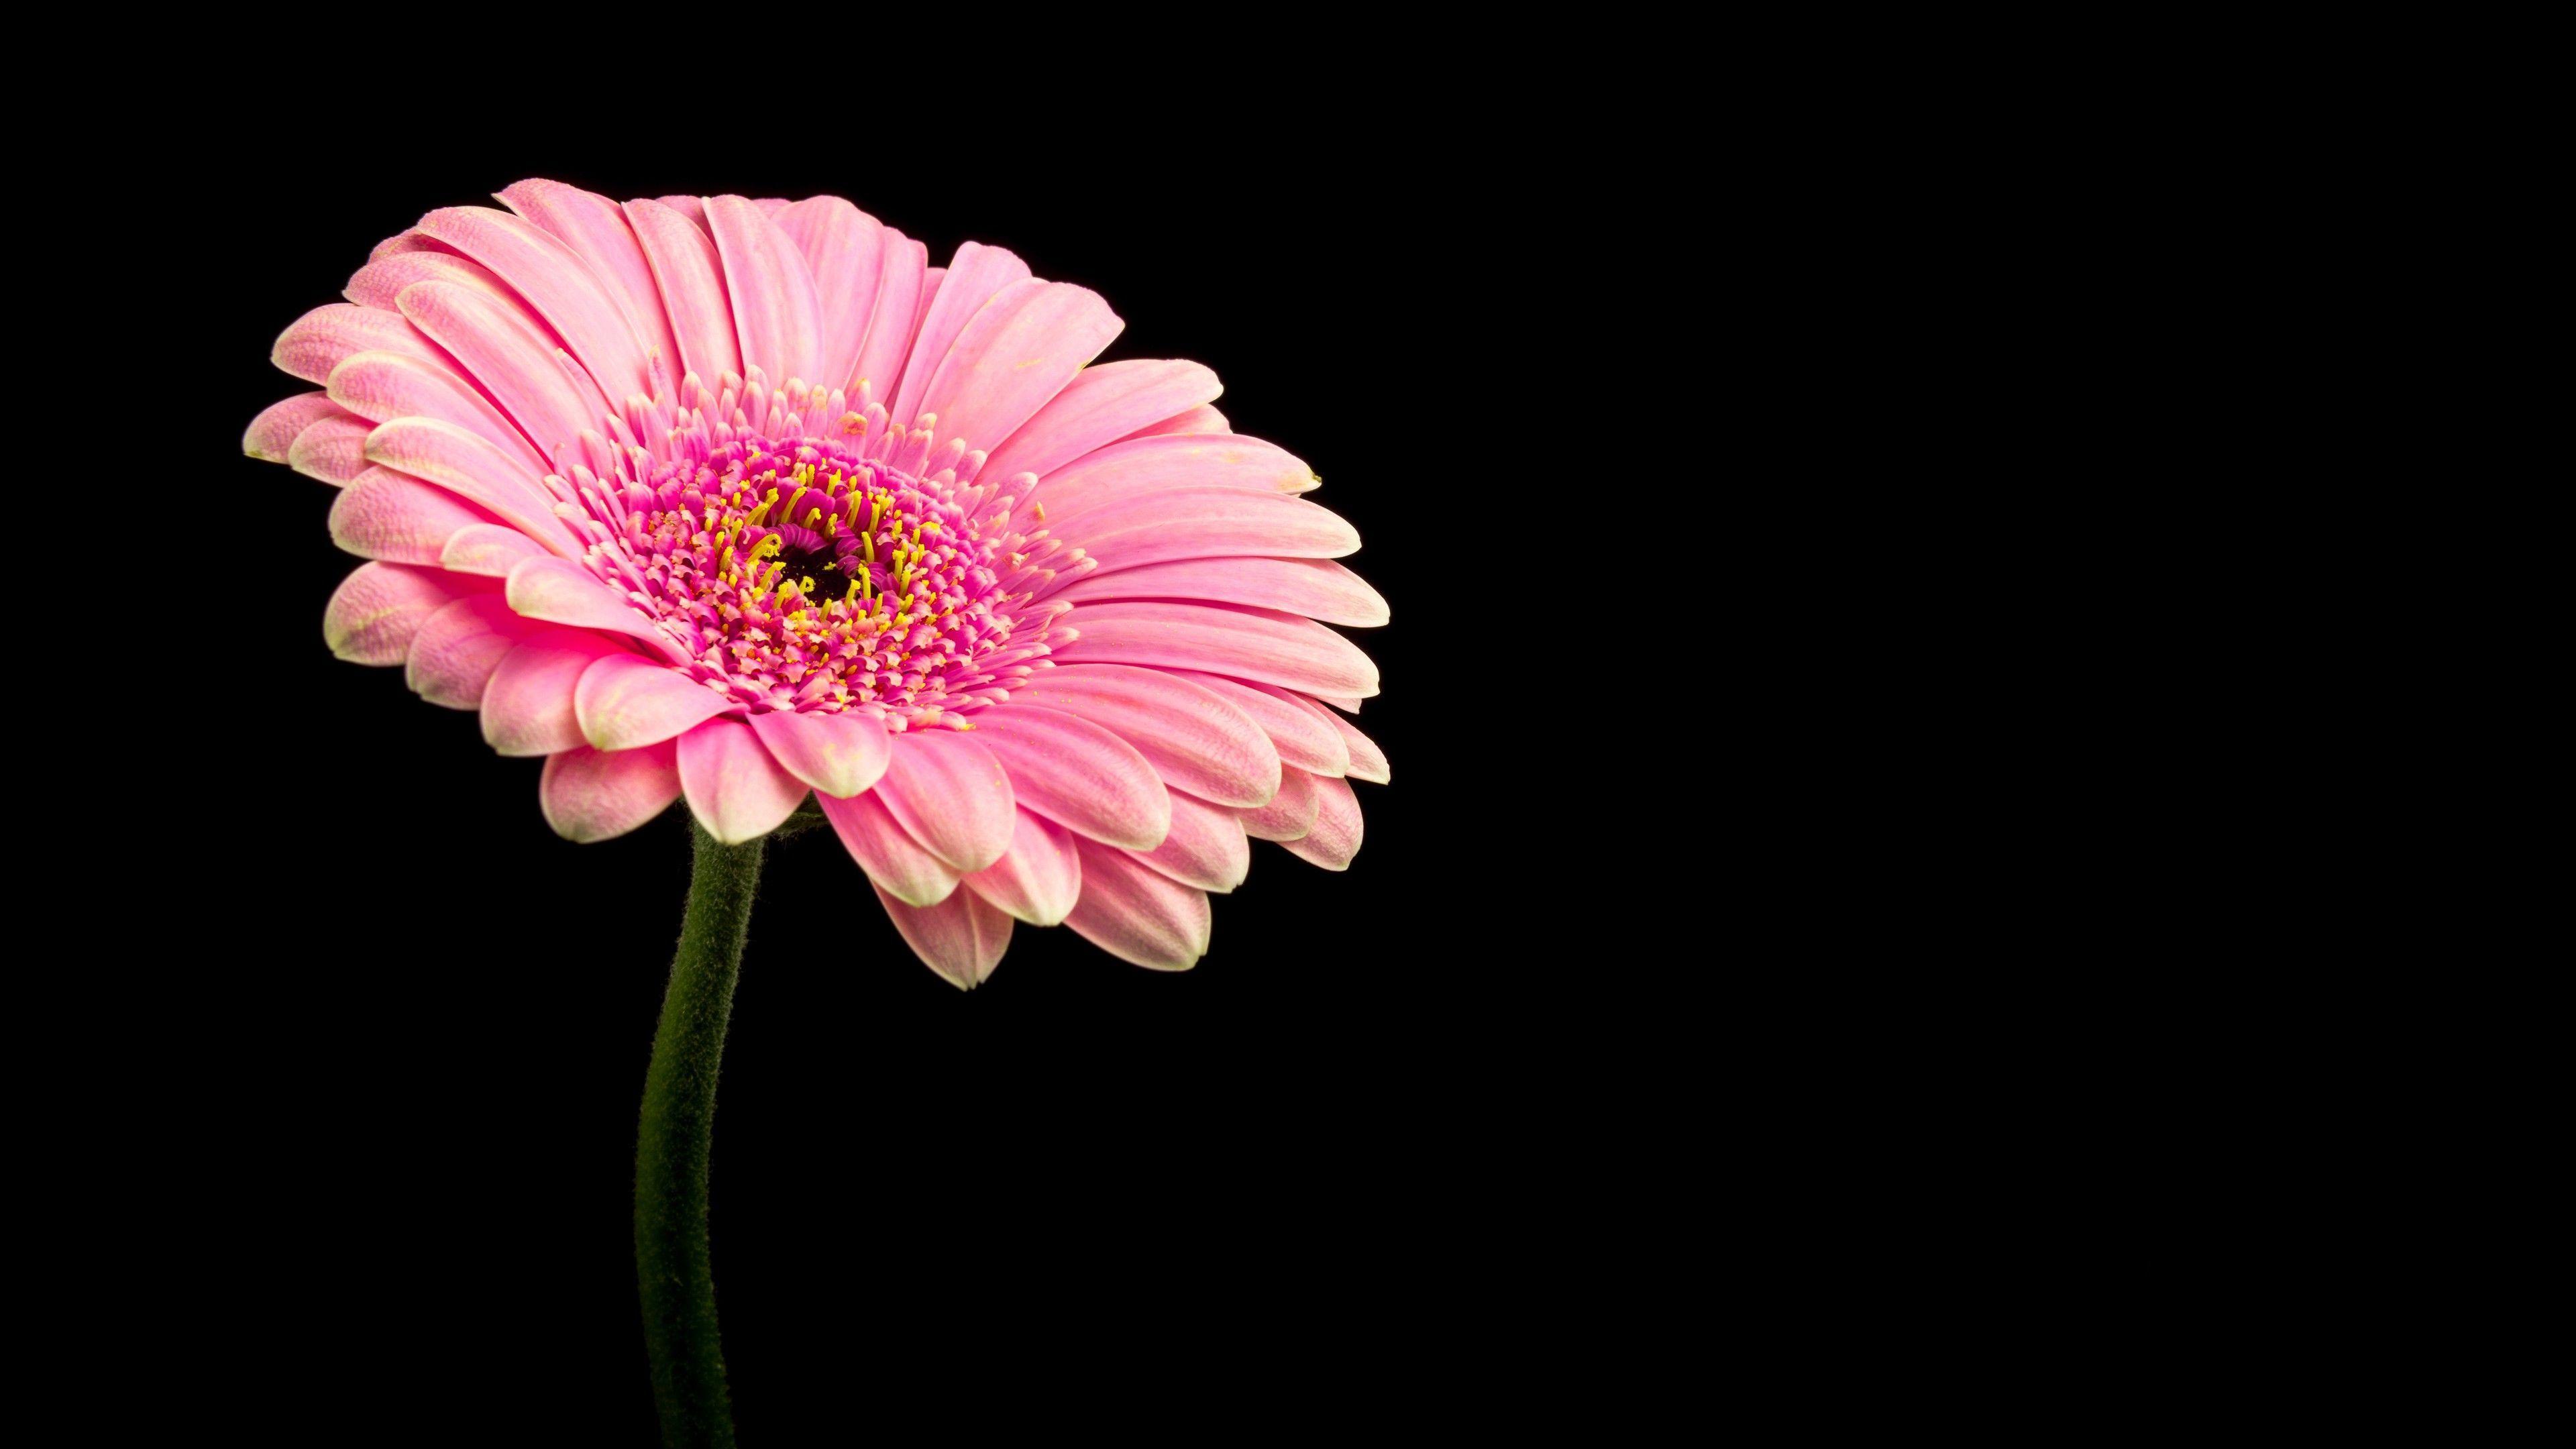 Pink Daisy Flower 4K Wallpaper. Pink daisy, Daisy flower, Flowers